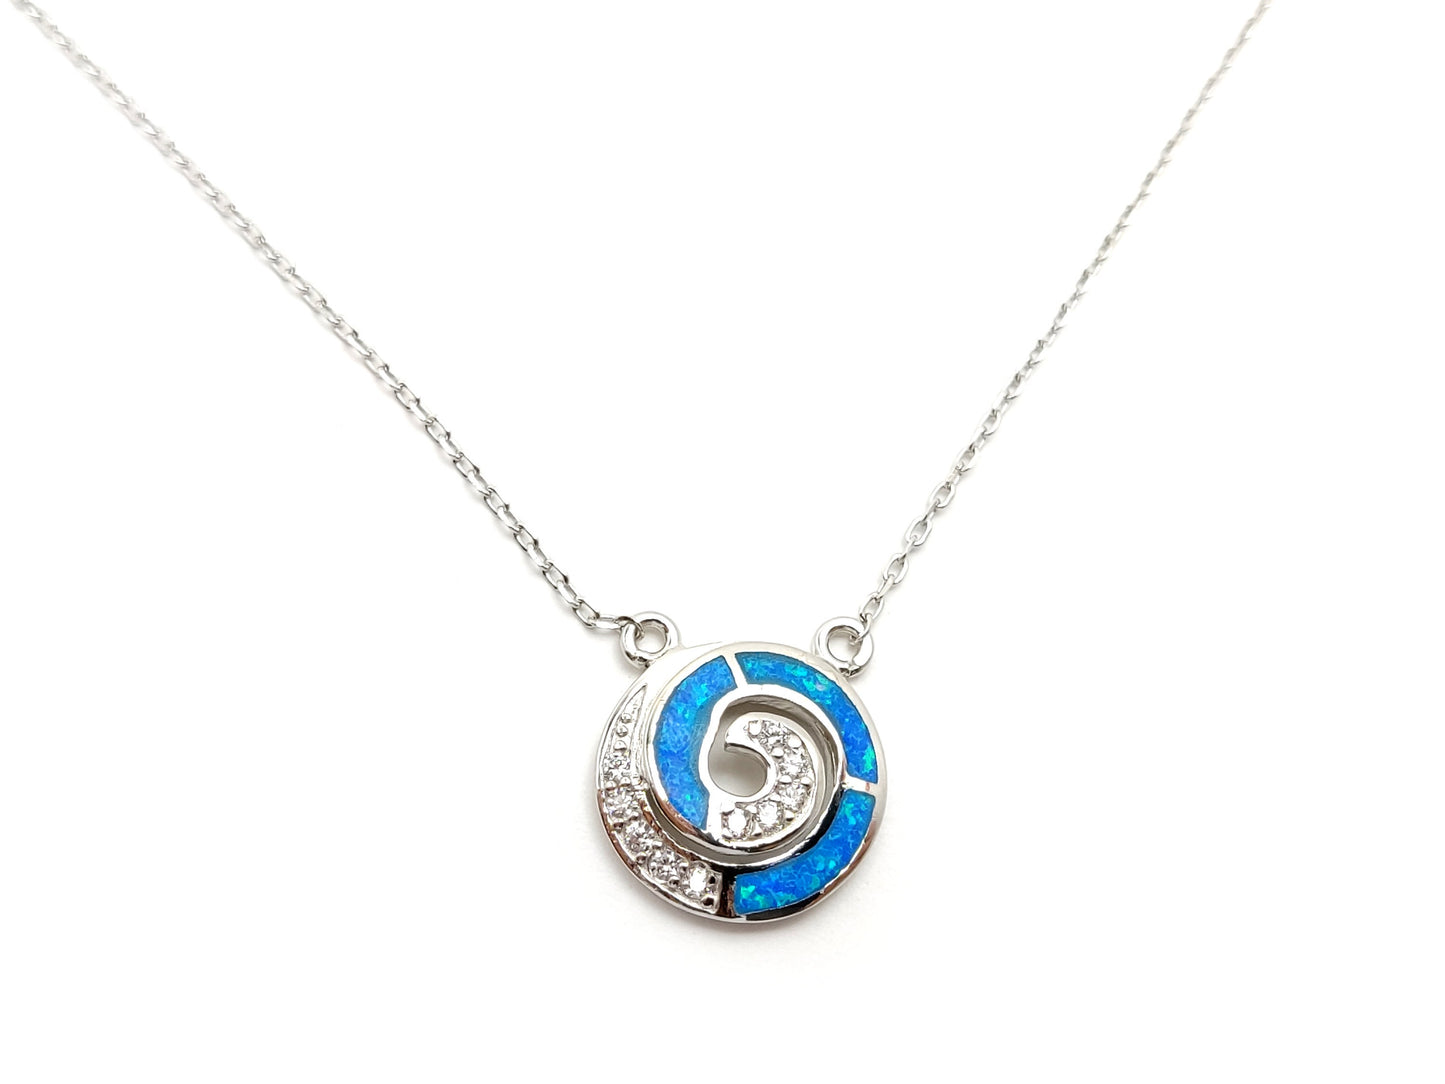 Collier en argent grec, cercle de vie Infinity Spiral Design Ocean Blue Opal Chain Pendant, Jewelry From Greece, Griechischer Silber Schmuck